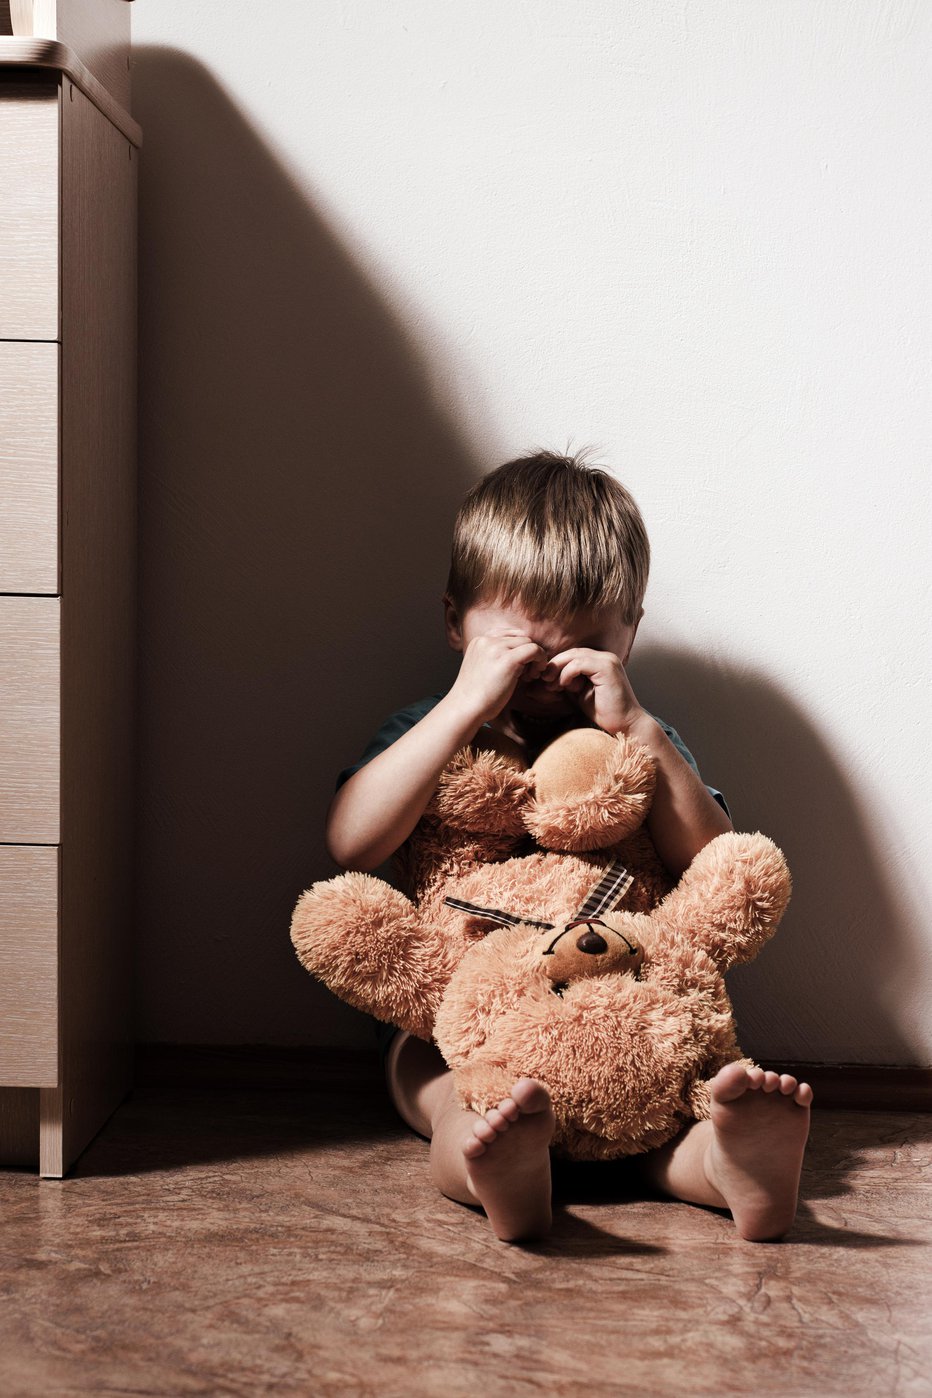 Fotografija: Bodo žrtve otroci?  FOTO: Paulbiryukov Getty Images/istockphoto